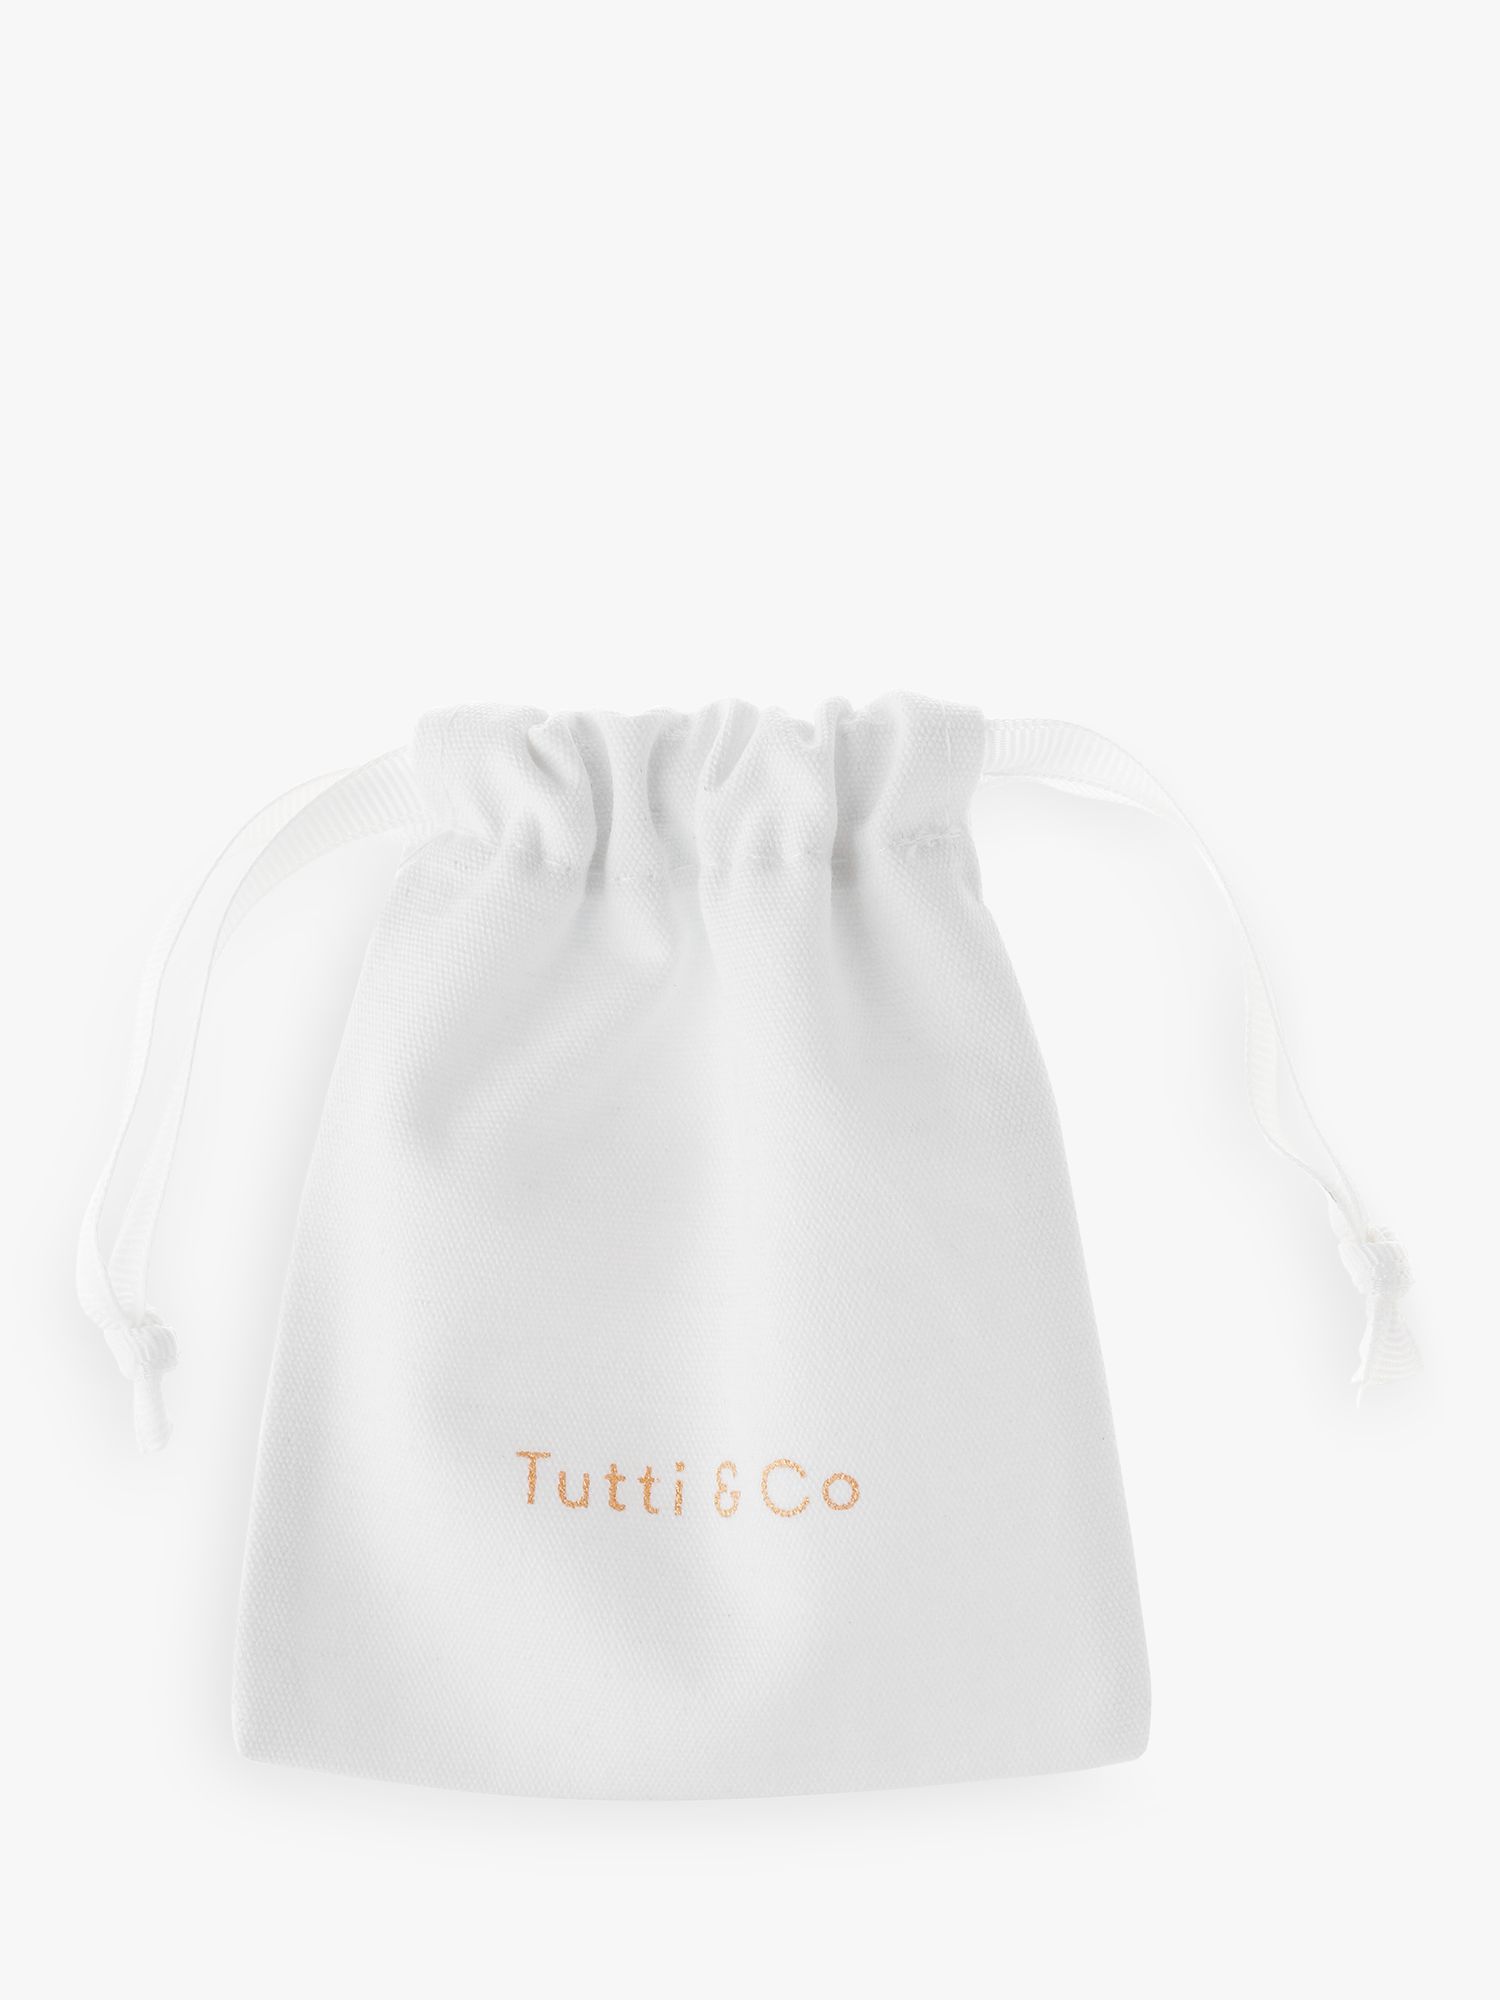 Tutti & Co Textured Twist Bangle, Gold